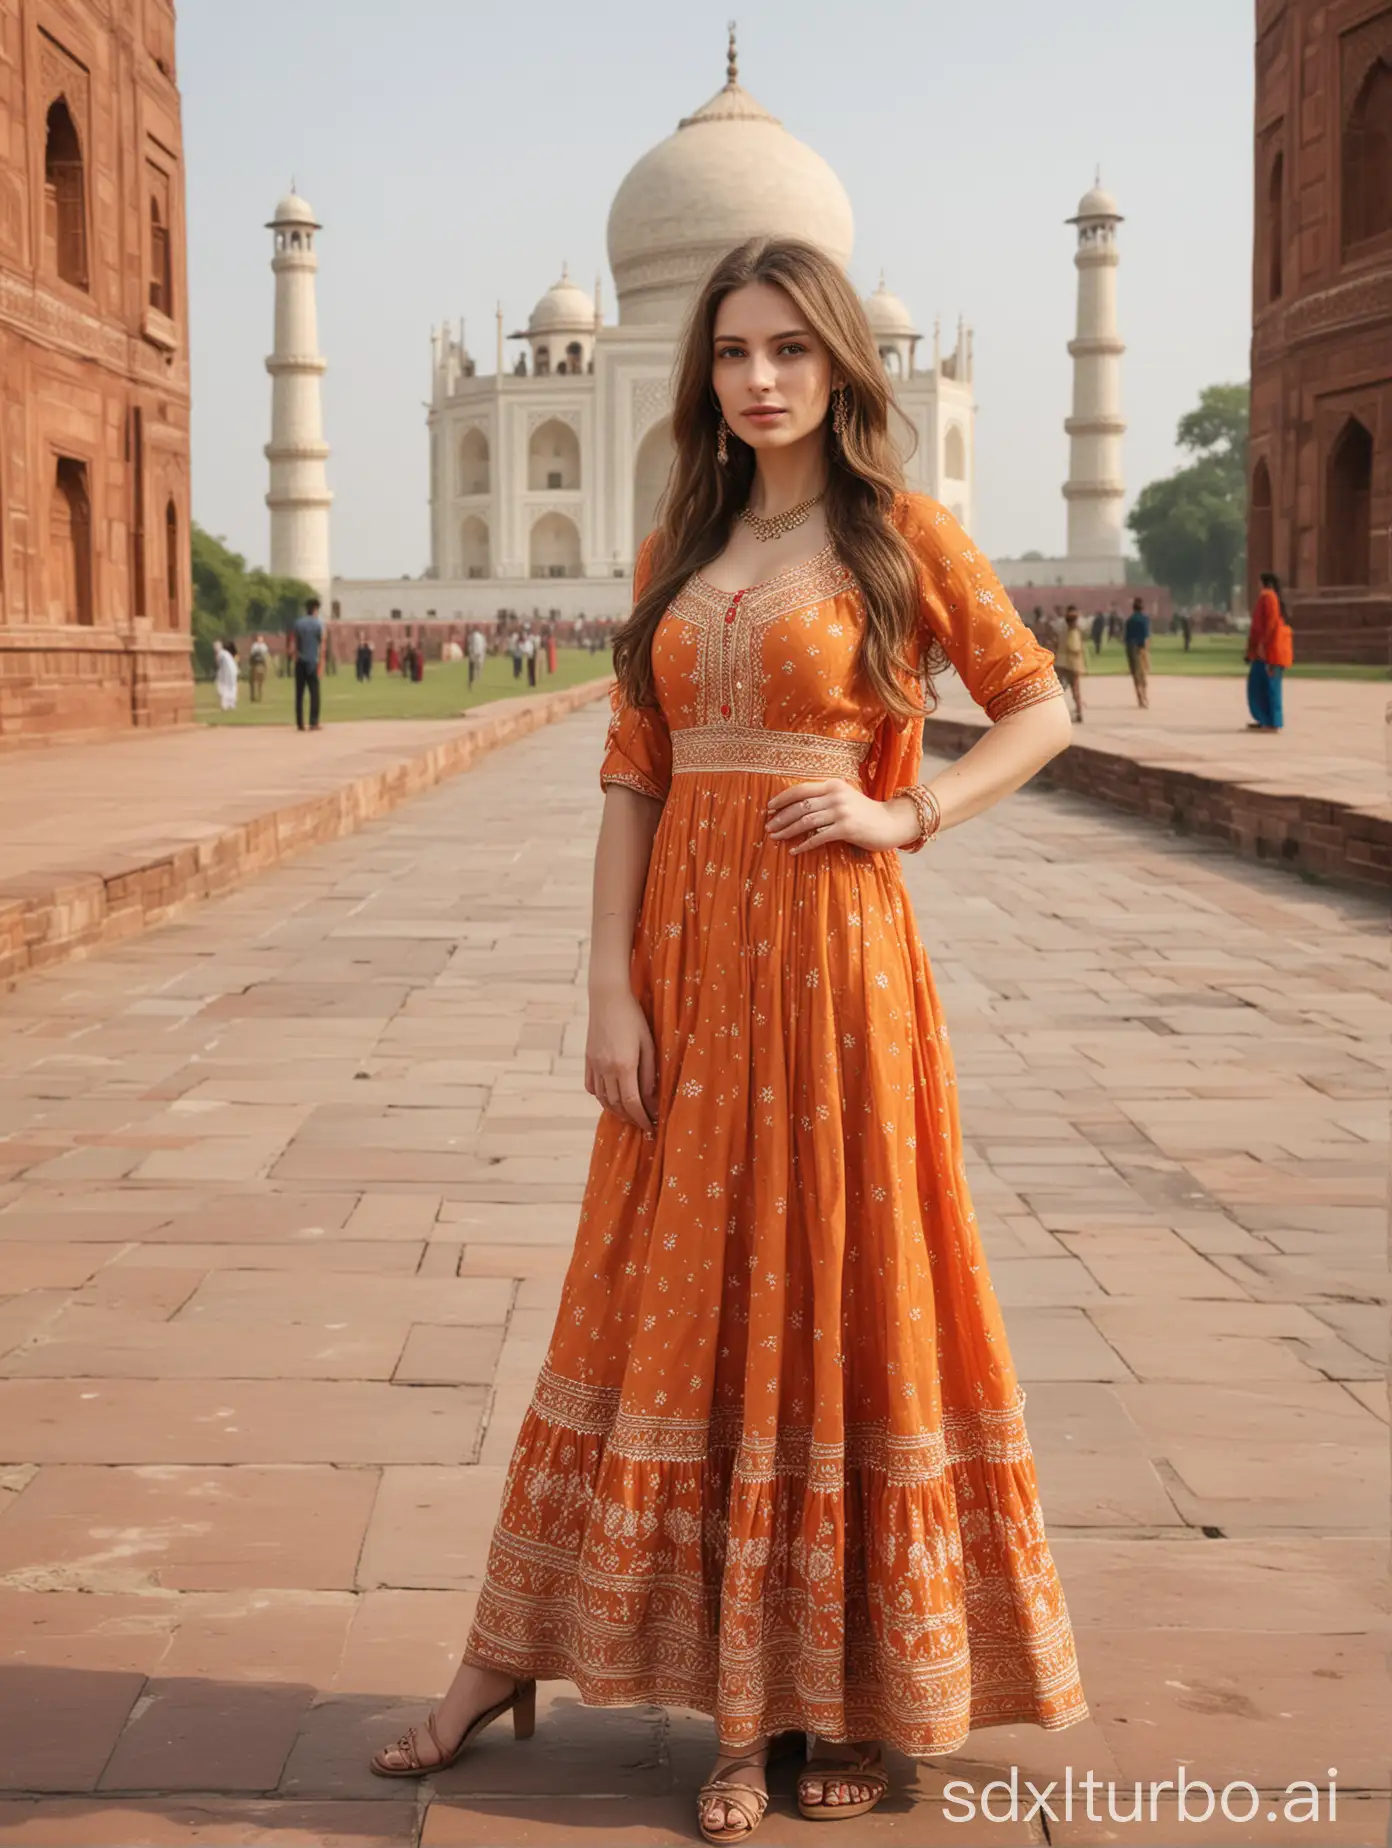 young caucasian woman, long brown hair, slim body, small breasts, orange indian dress, in front of Taj Mahal